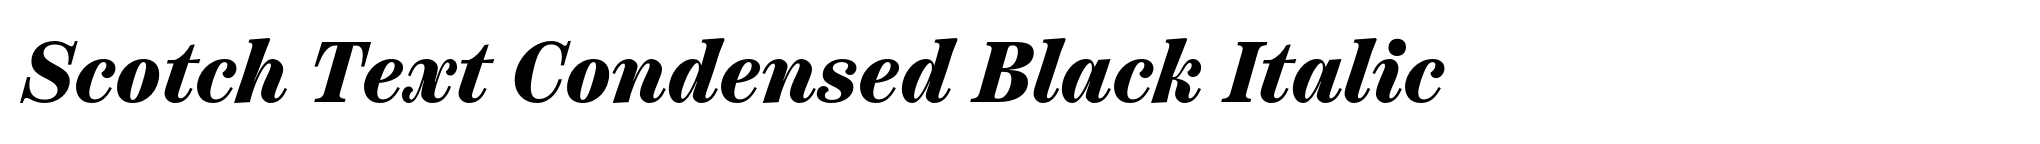 Scotch Text Condensed Black Italic image